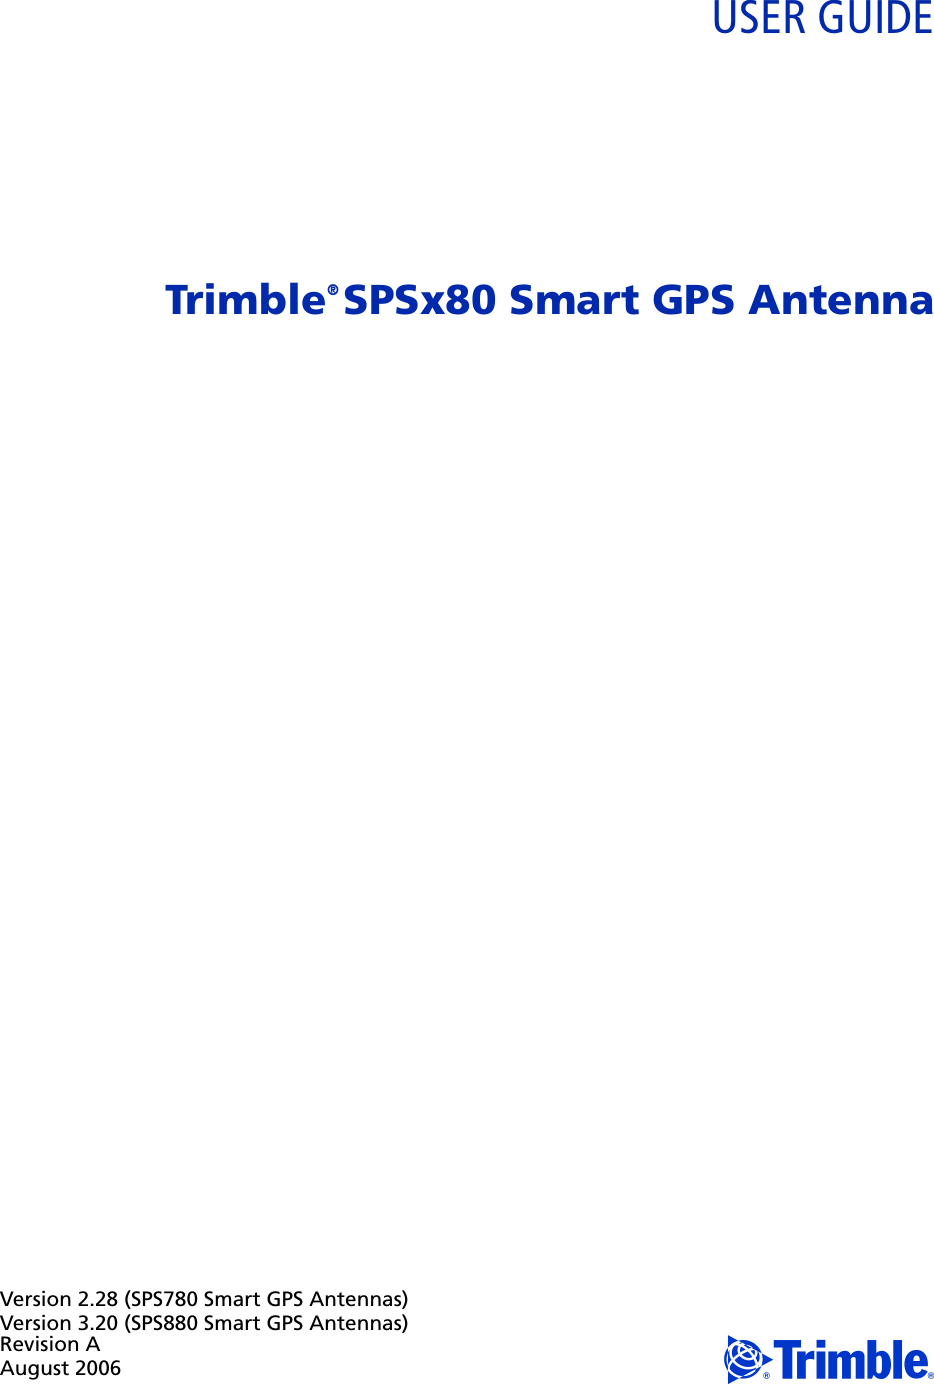 Version 2.28 (SPS780 Smart GPS Antennas)Version 3.20 (SPS880 Smart GPS Antennas)Revision AAugust 2006 USER GUIDETrimble® SPSx80 Smart GPS Antenna